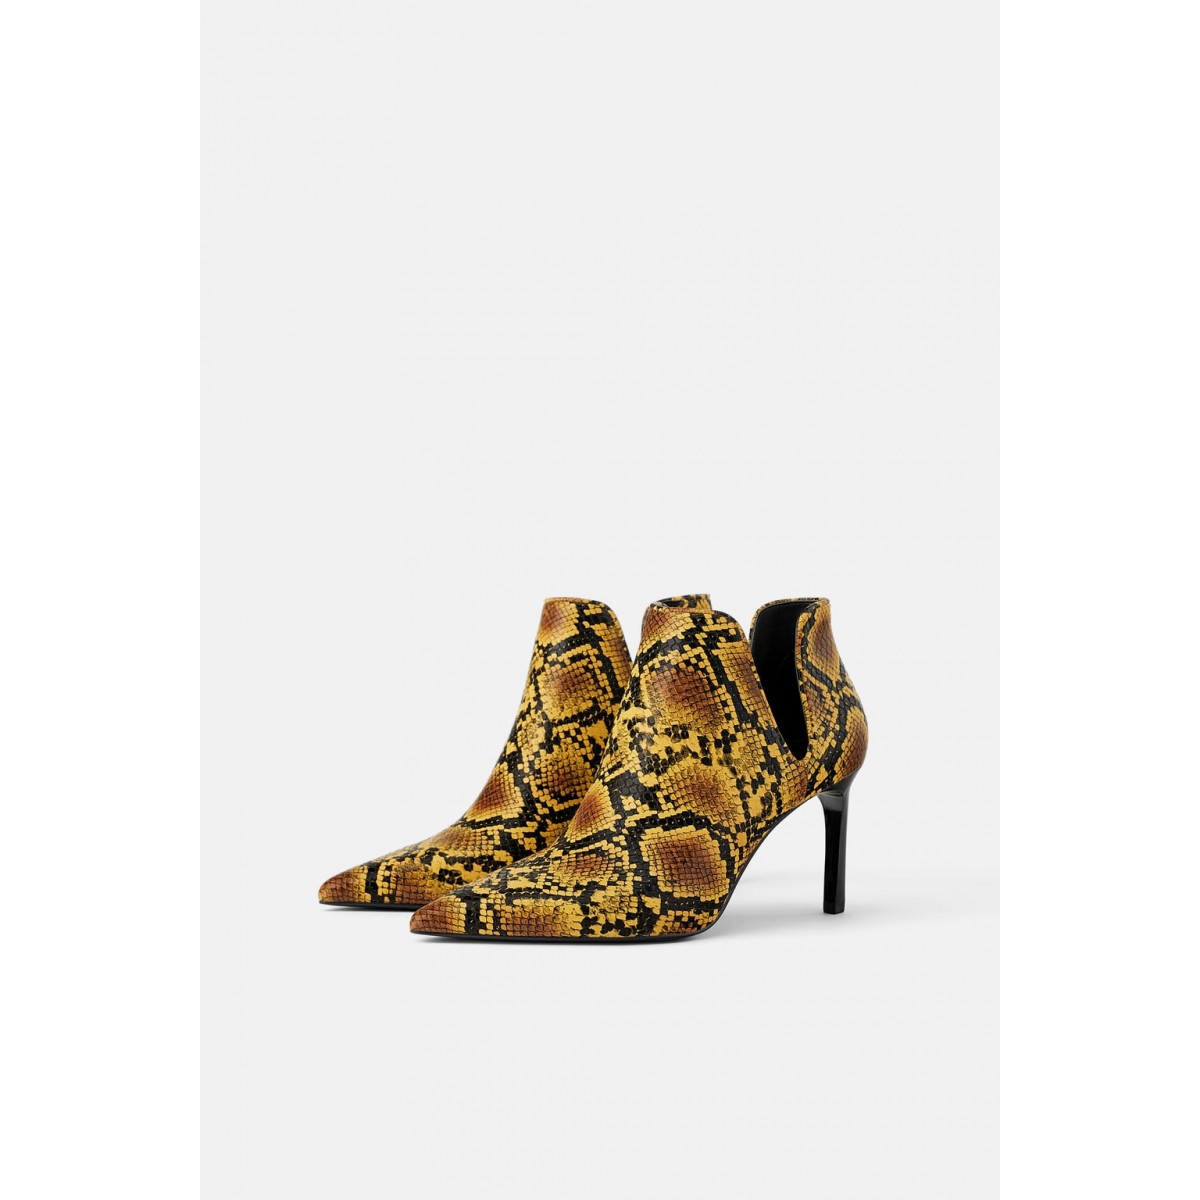 Zara Animal Print Mid Heel Ankle Boots